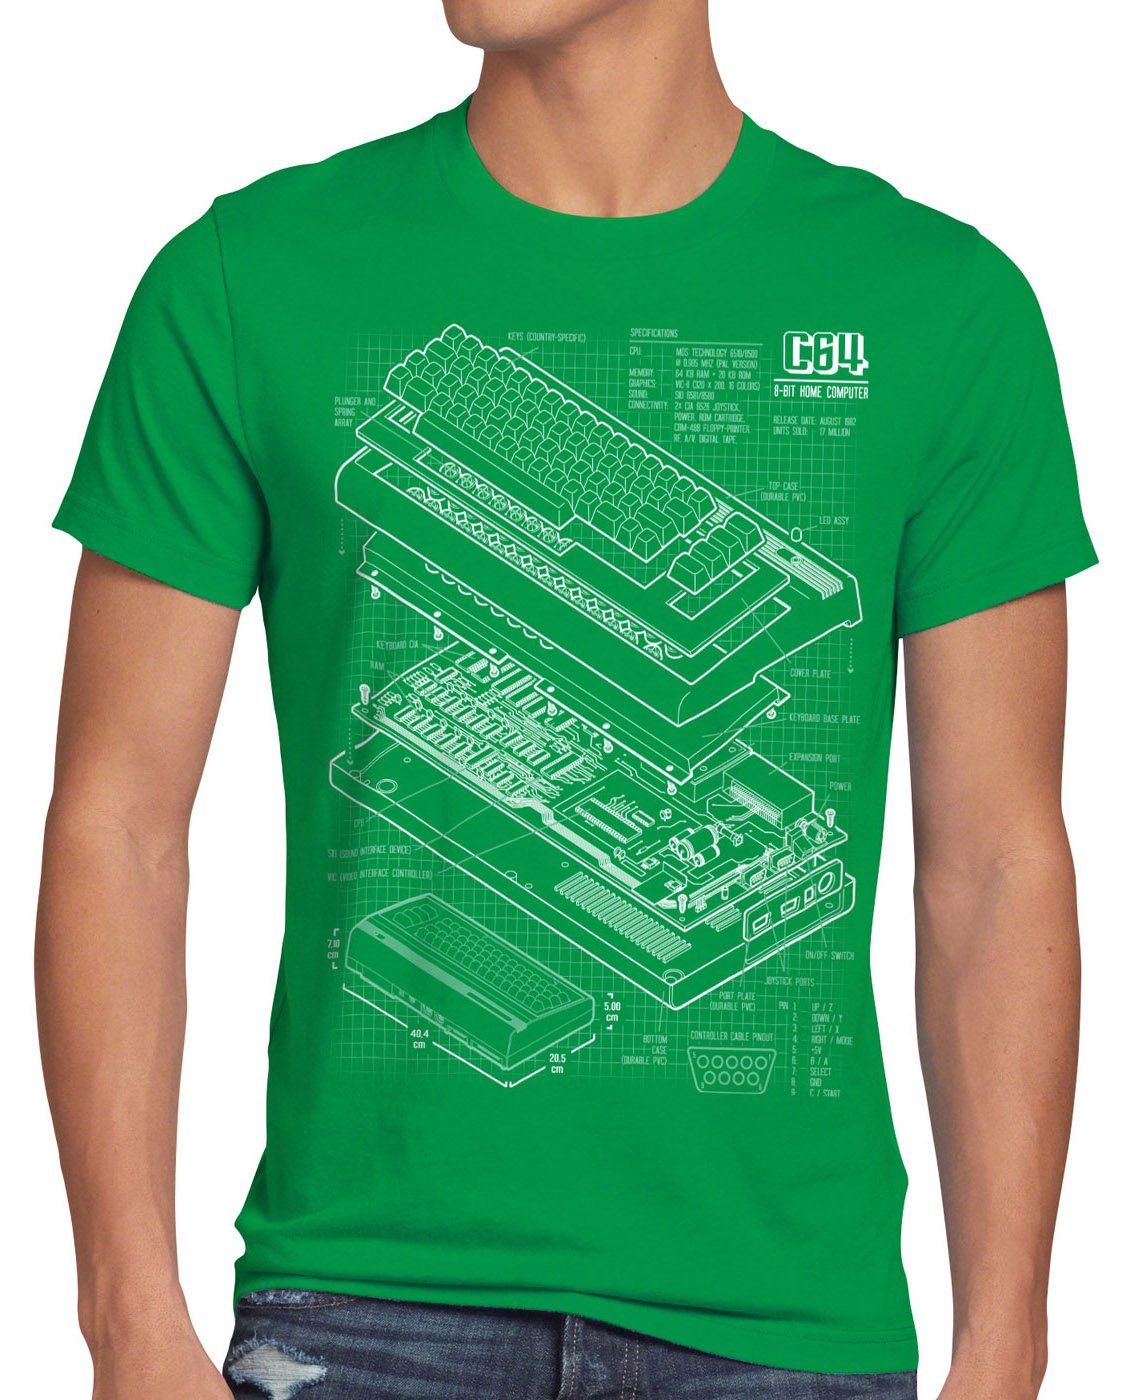 style3 Print-Shirt Herren T-Shirt C64 Heimcomputer Blaupause classic gamer grün